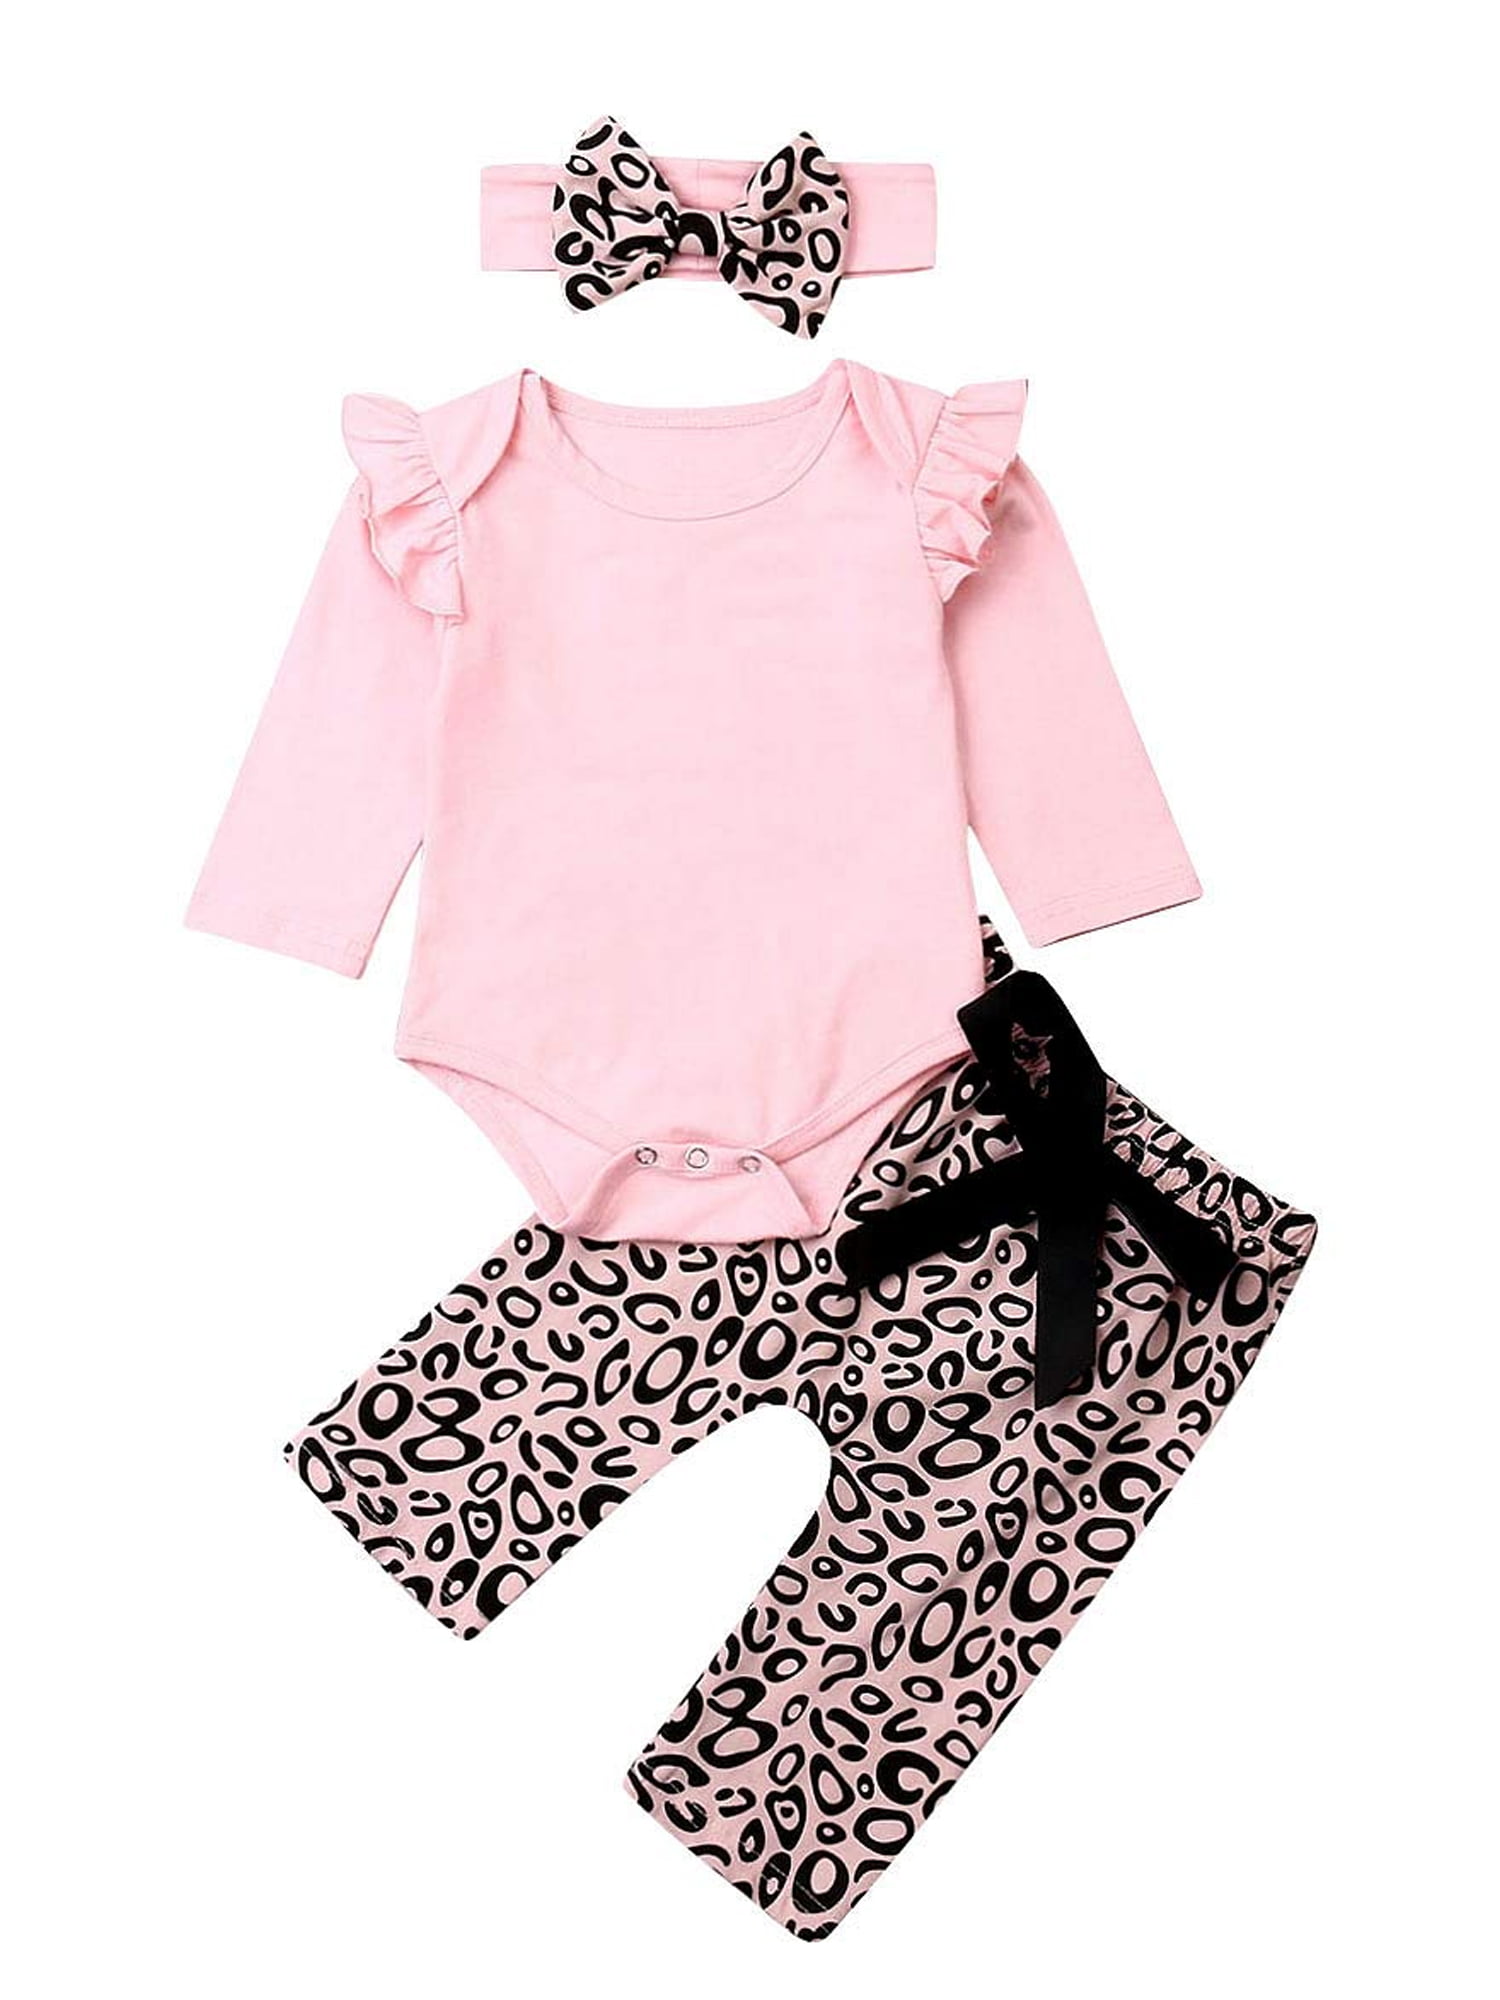 3Pcs Newborn Baby Girl Clothes Long Sleeve Romper Tops+Pants+Headband Outfit Set